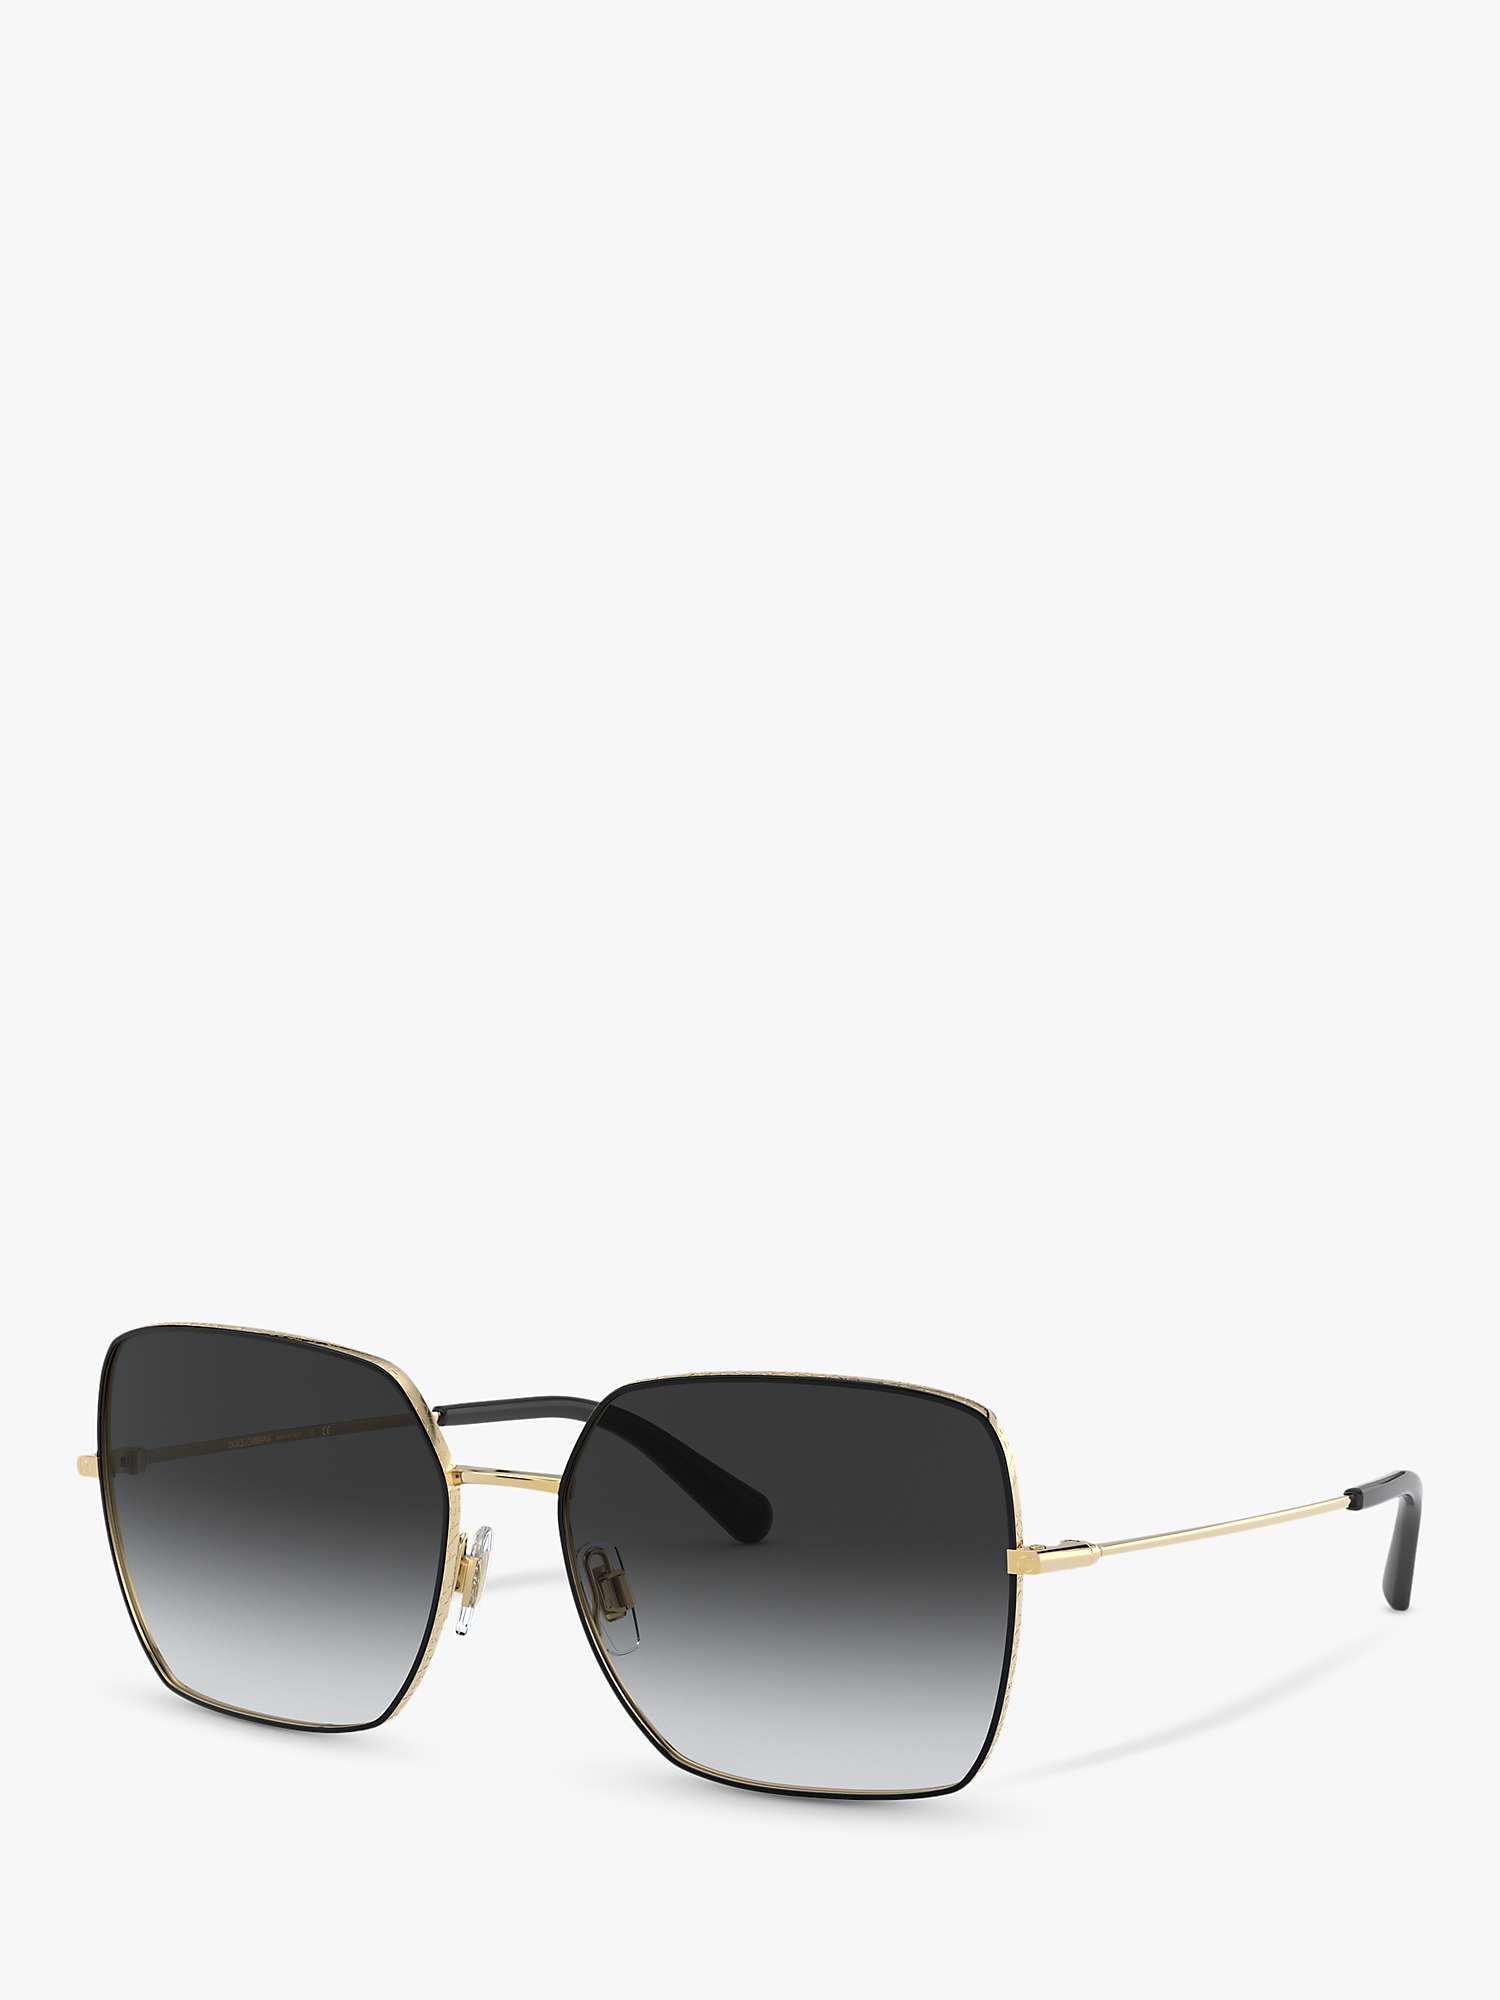 Dolce & Gabbana DG2242 Women's Square Sunglasses, Gold/Black at John ...